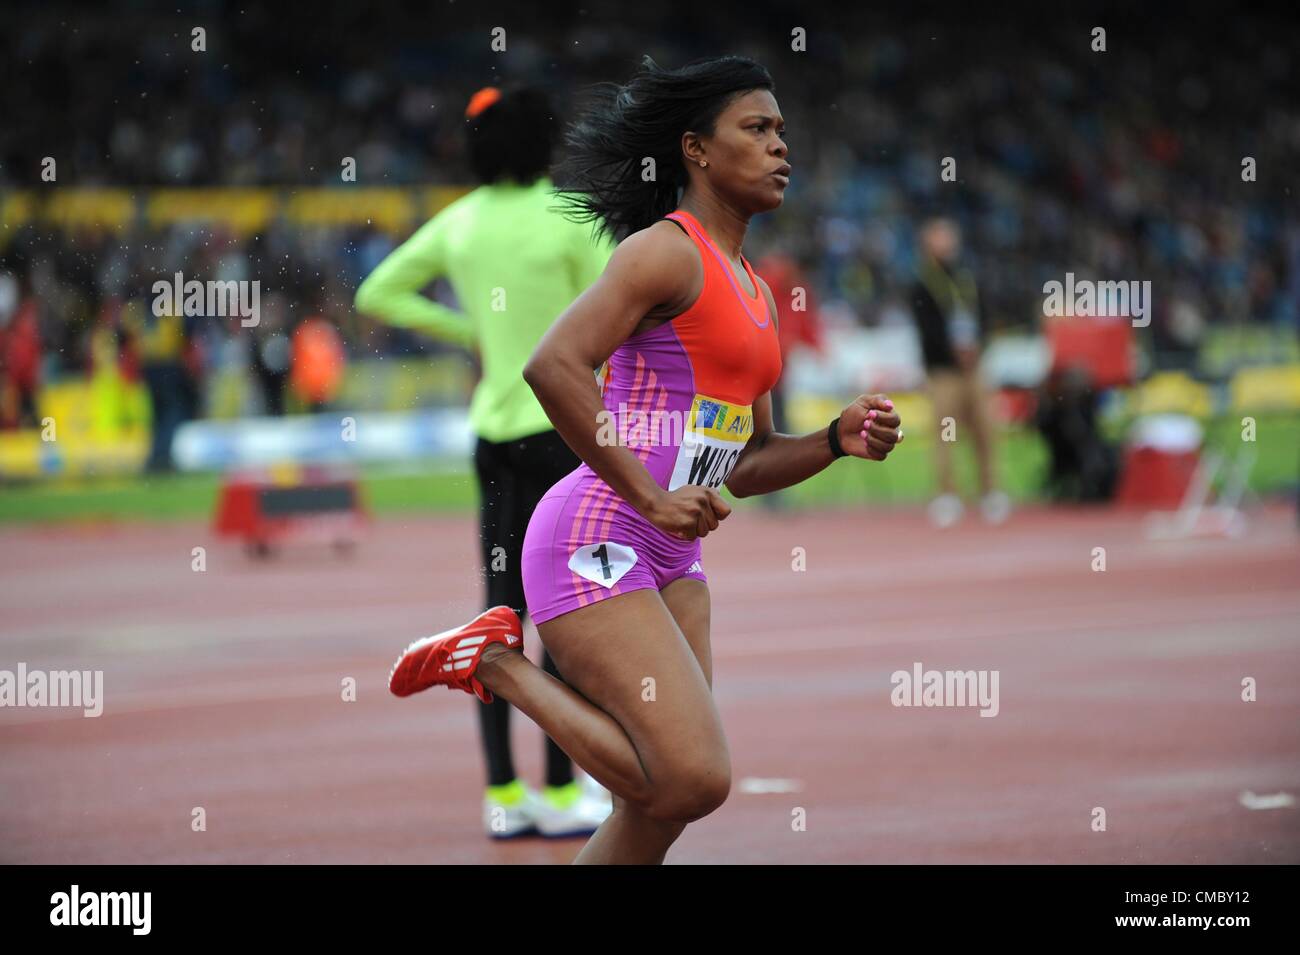 13.07.2012 London ENGLAND Womens 400m Hurdles Final, Nickiesha Wilson in action during the Aviva Grand Prix at the Crystal Palace Stadium. Stock Photo